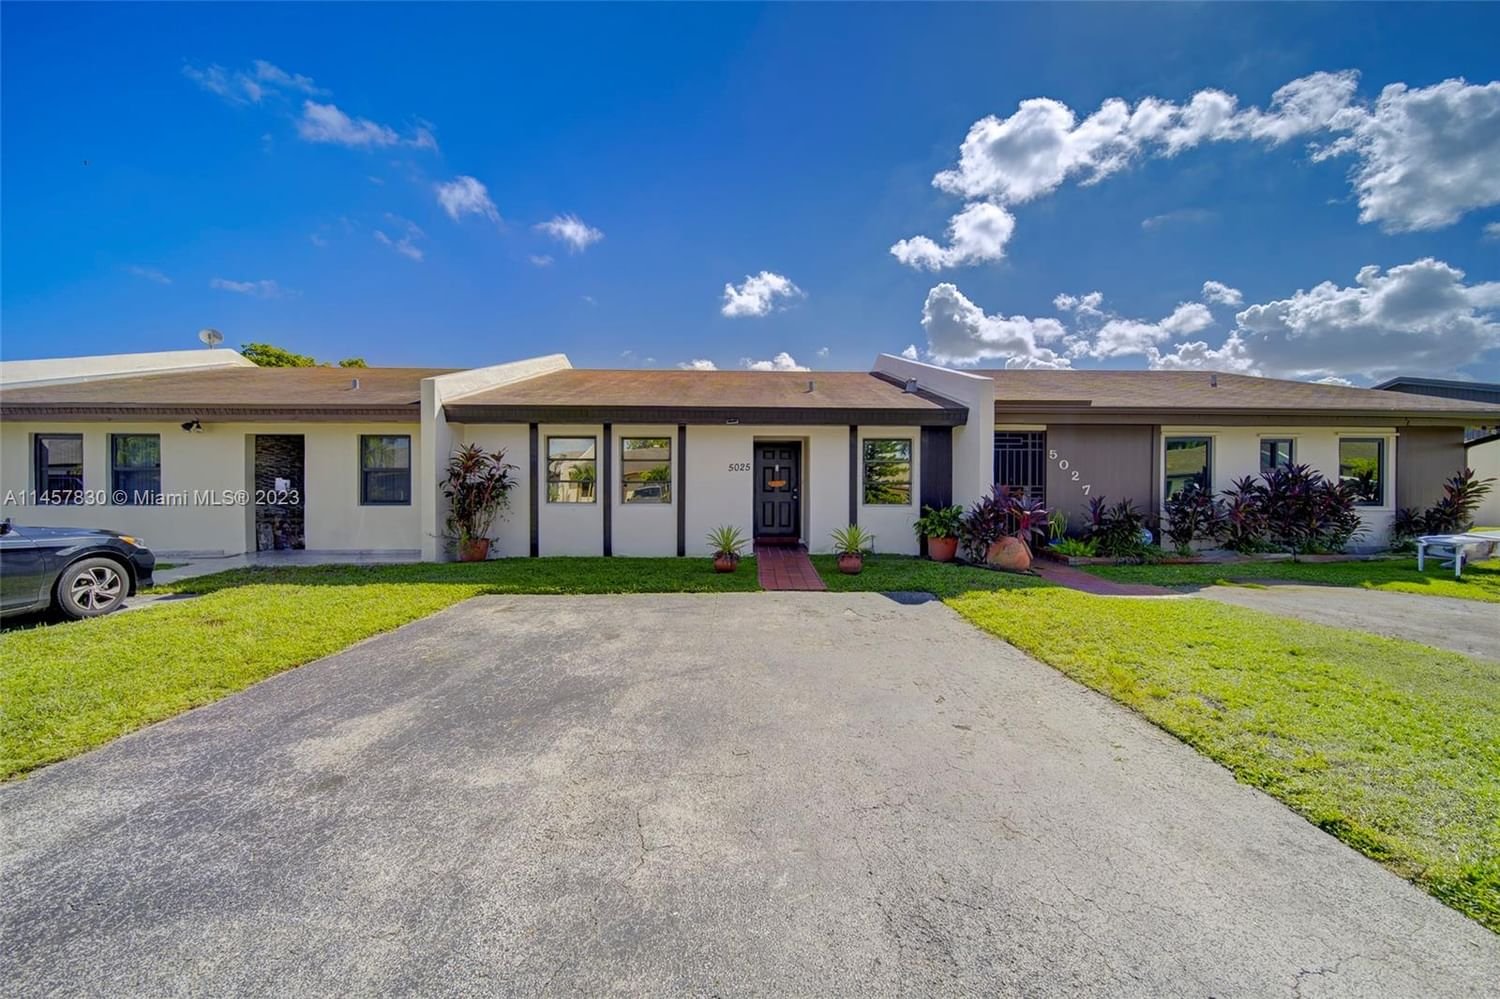 Real estate property located at 5025 139th Pl, Miami-Dade County, Miami, FL